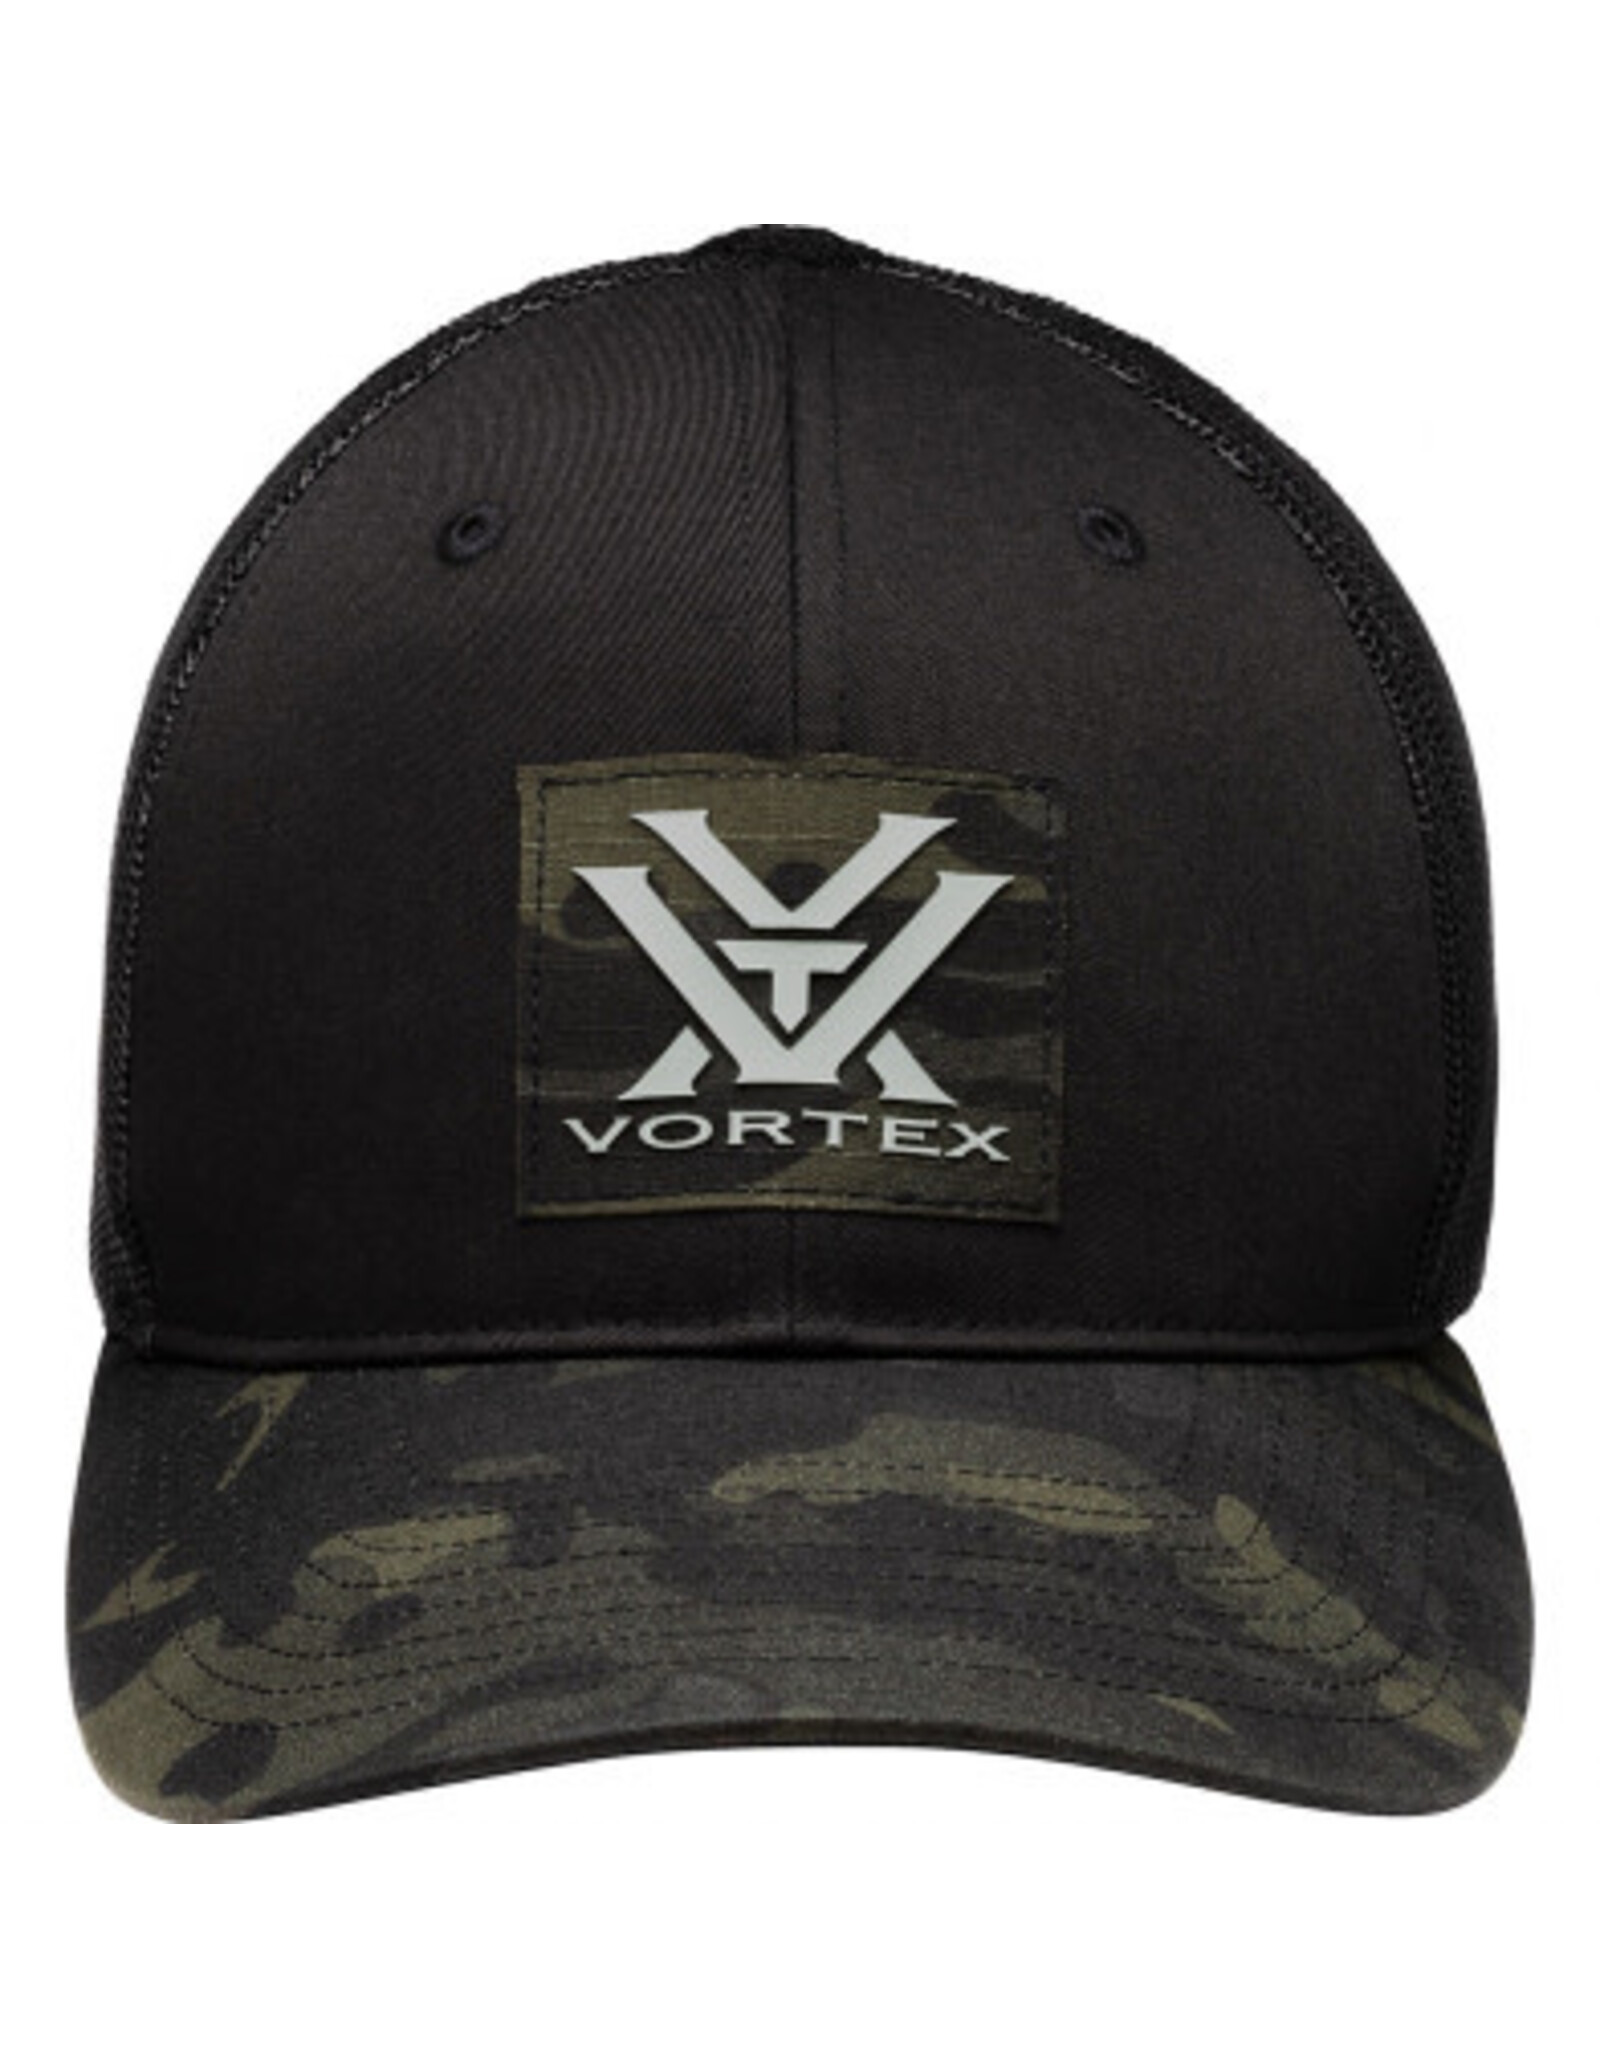 Vortex Vortex Cap Black Multicam Camo Pathbreaker